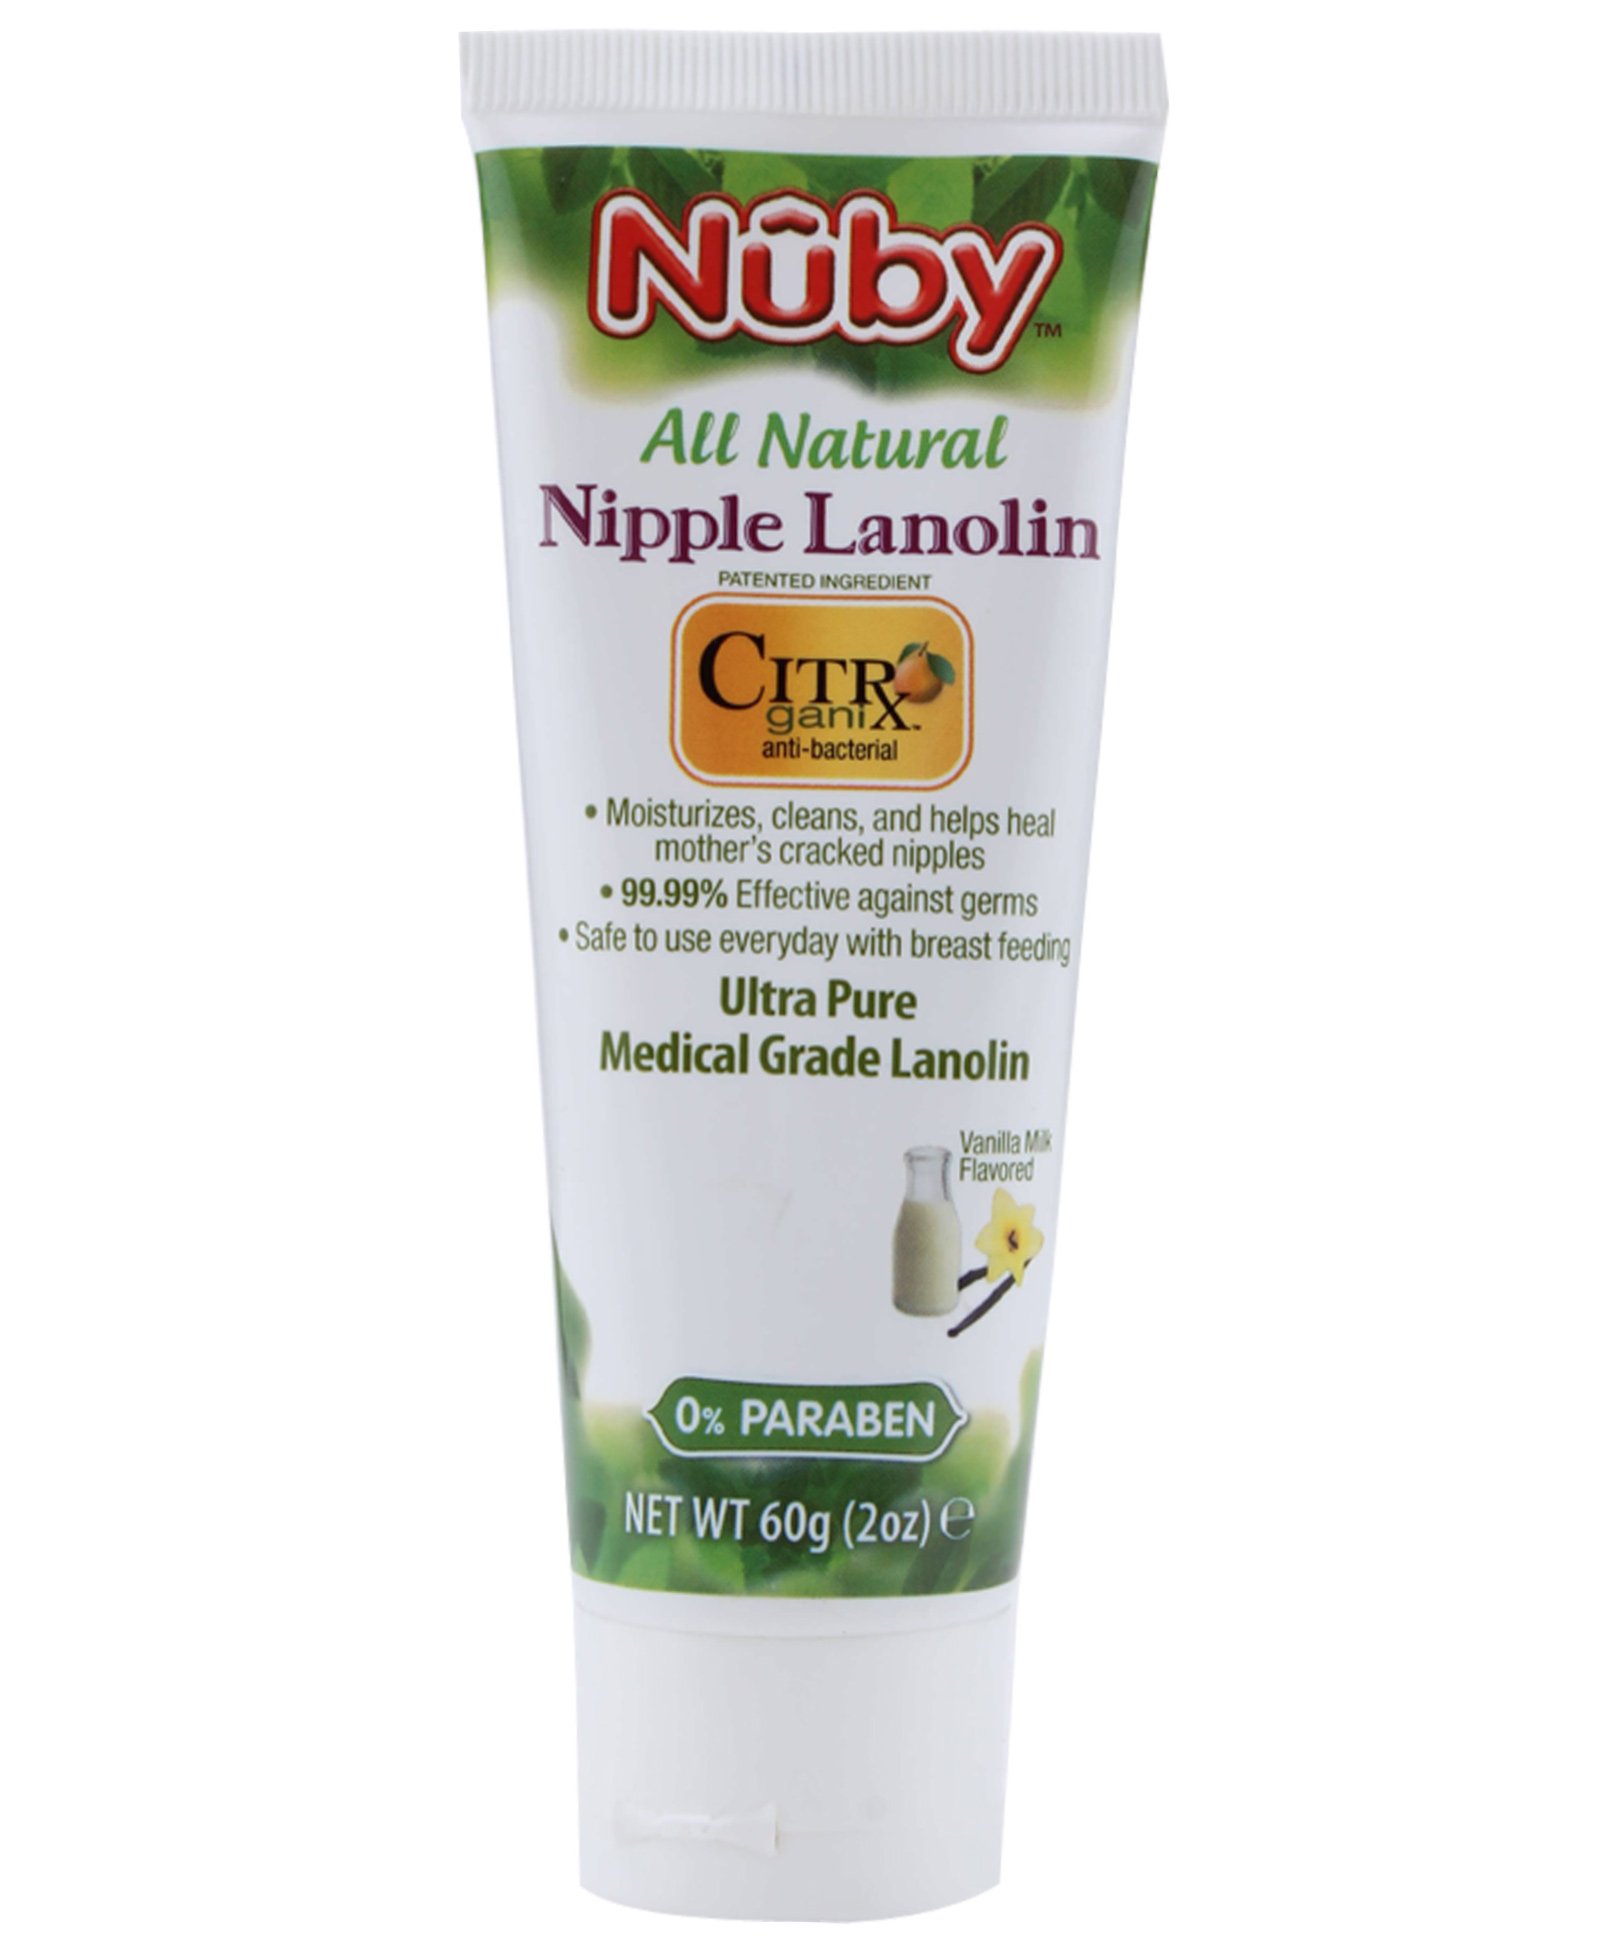 Nuby - All Natural Nipple Lanolin